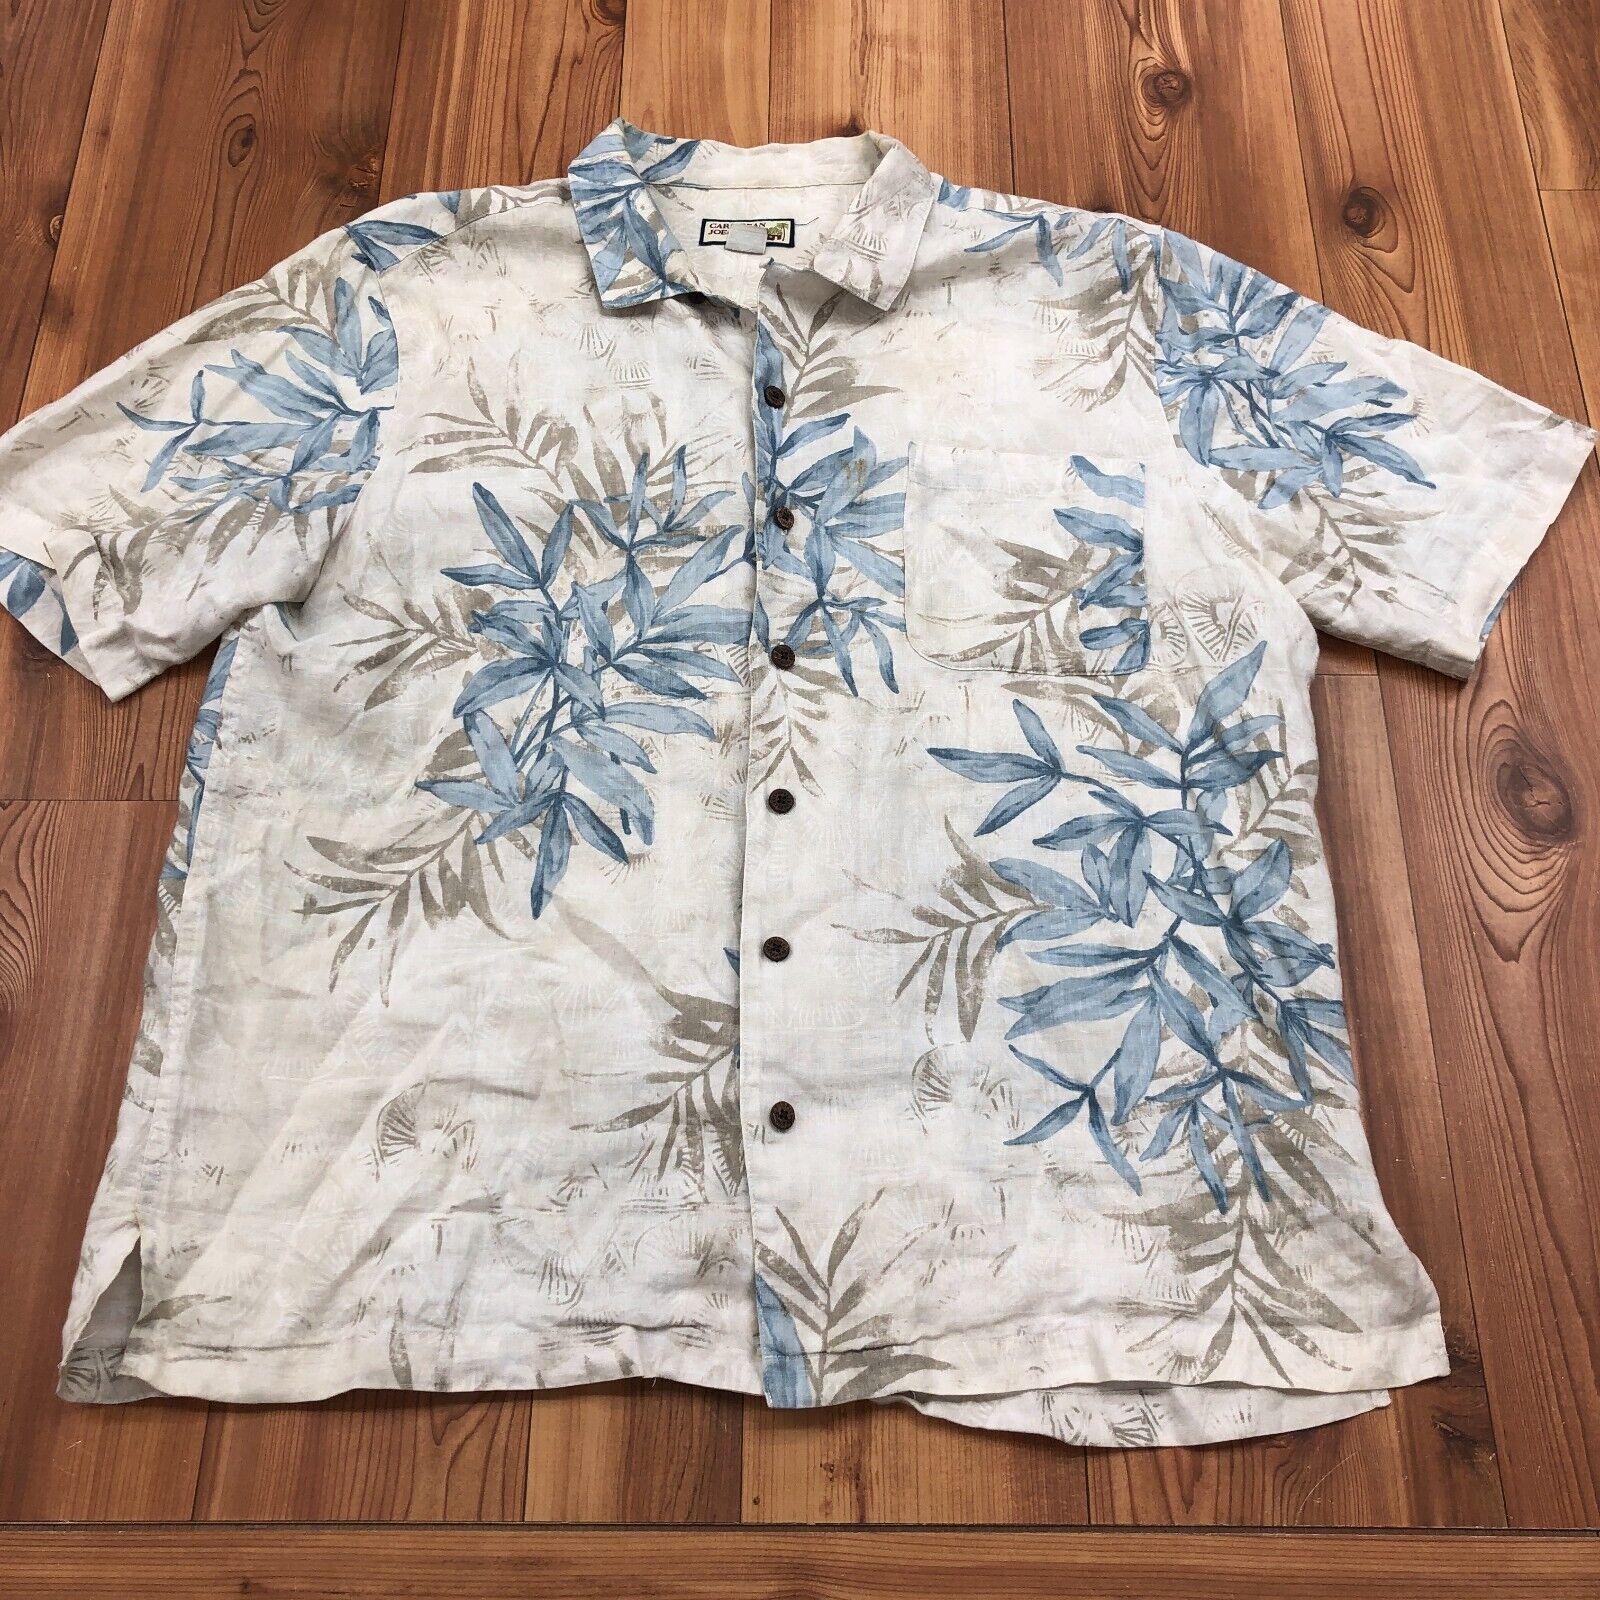 Caribbean Joe Tan And Blue Hawaiian Short Sleeve Button Up Shirt Men Size XL